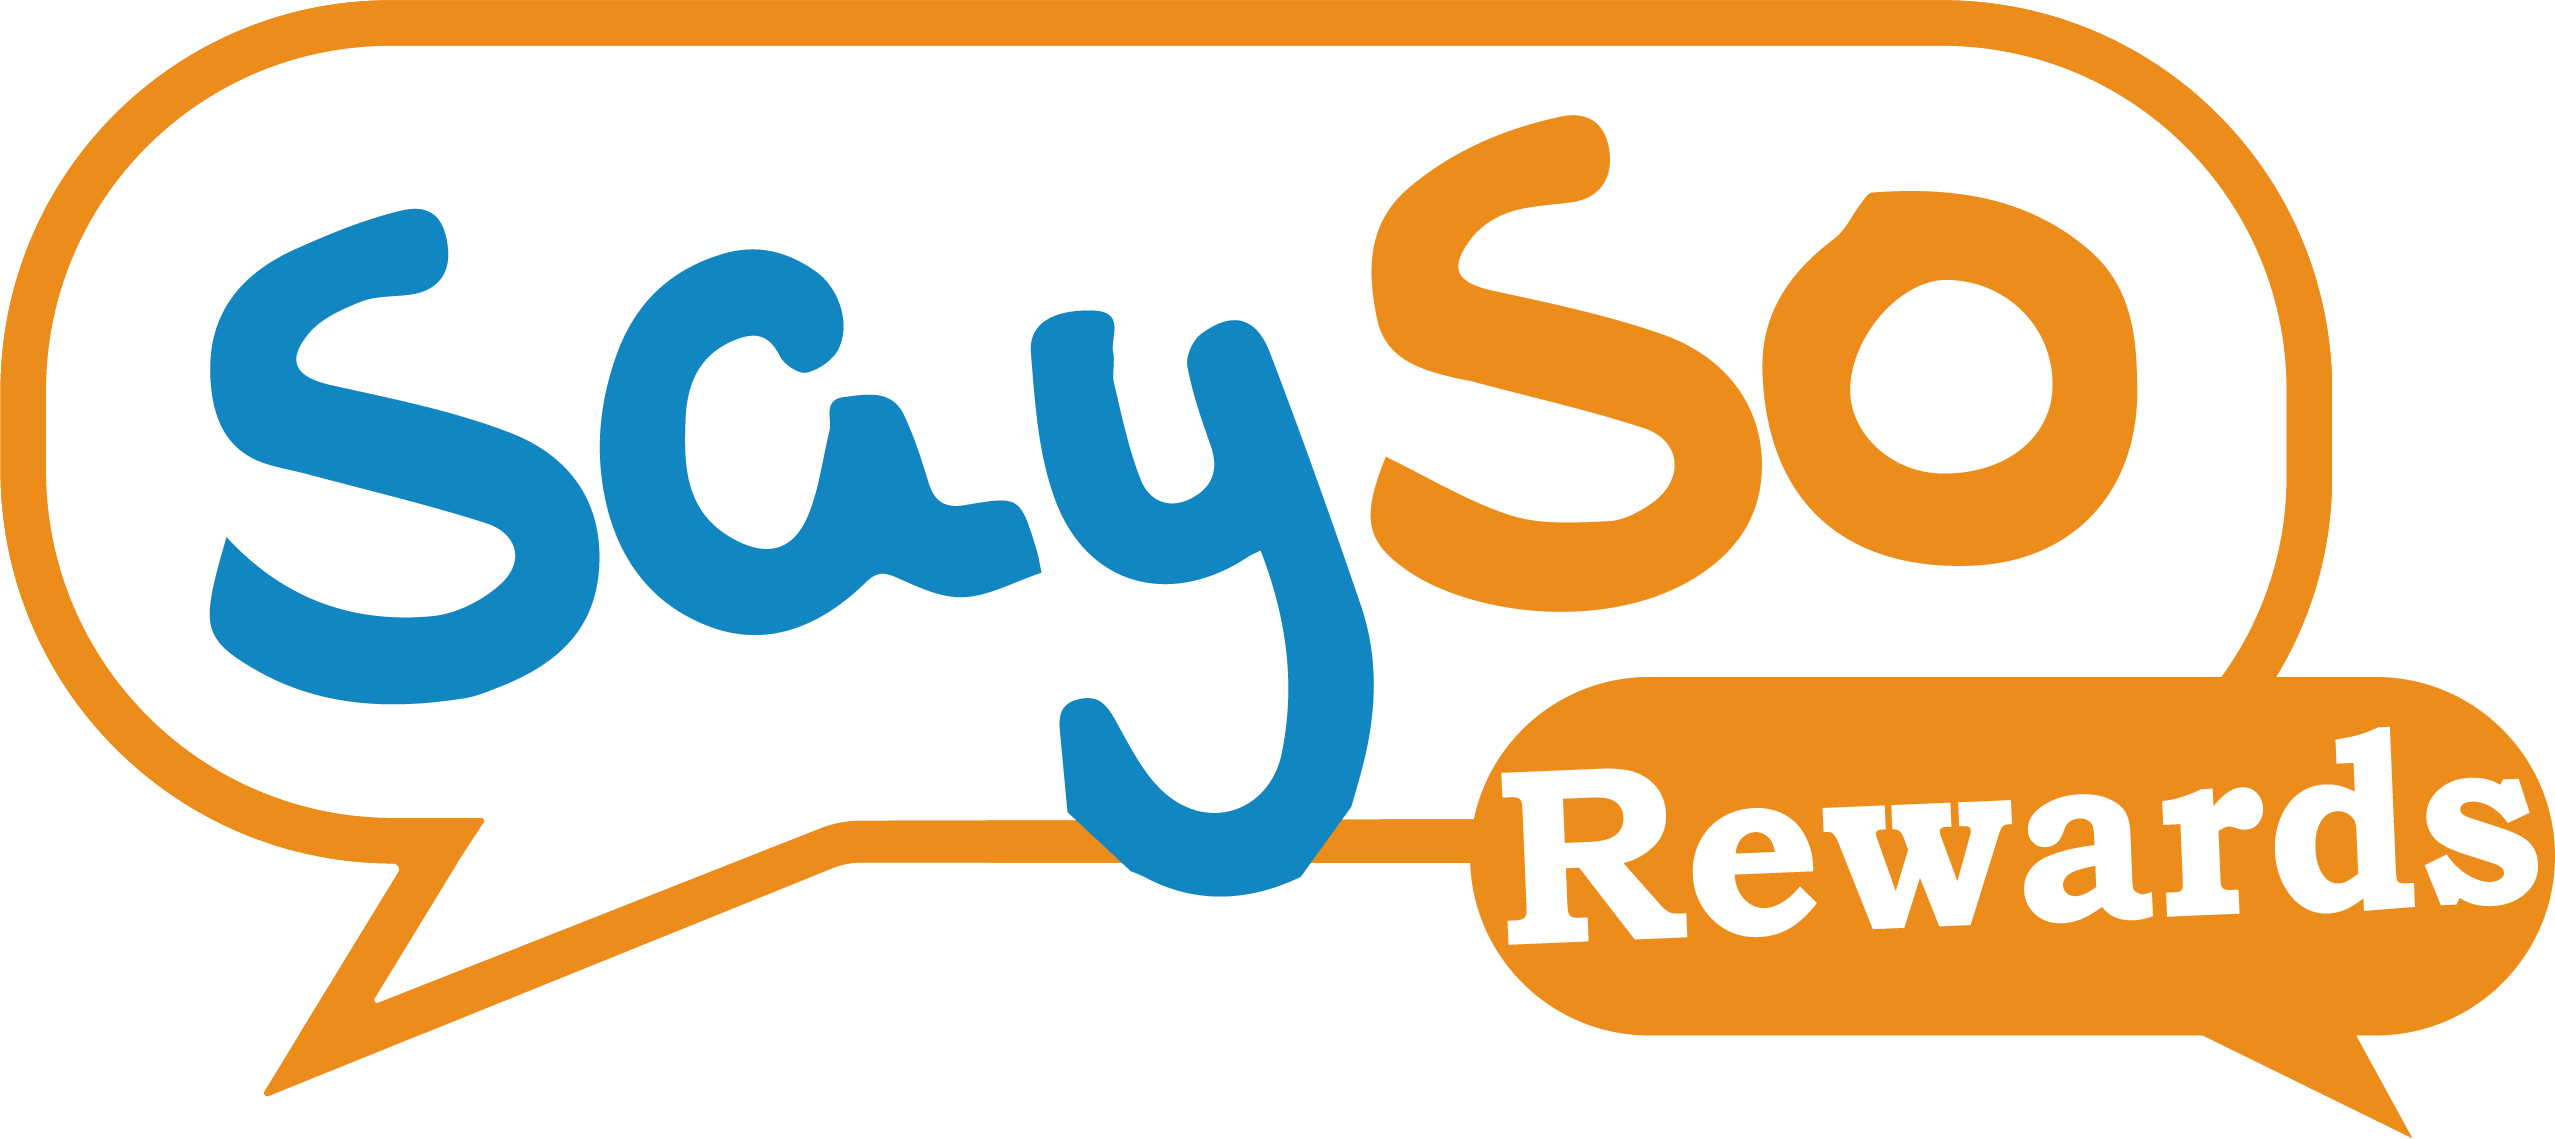 SaySo Rewards Logo - Questions